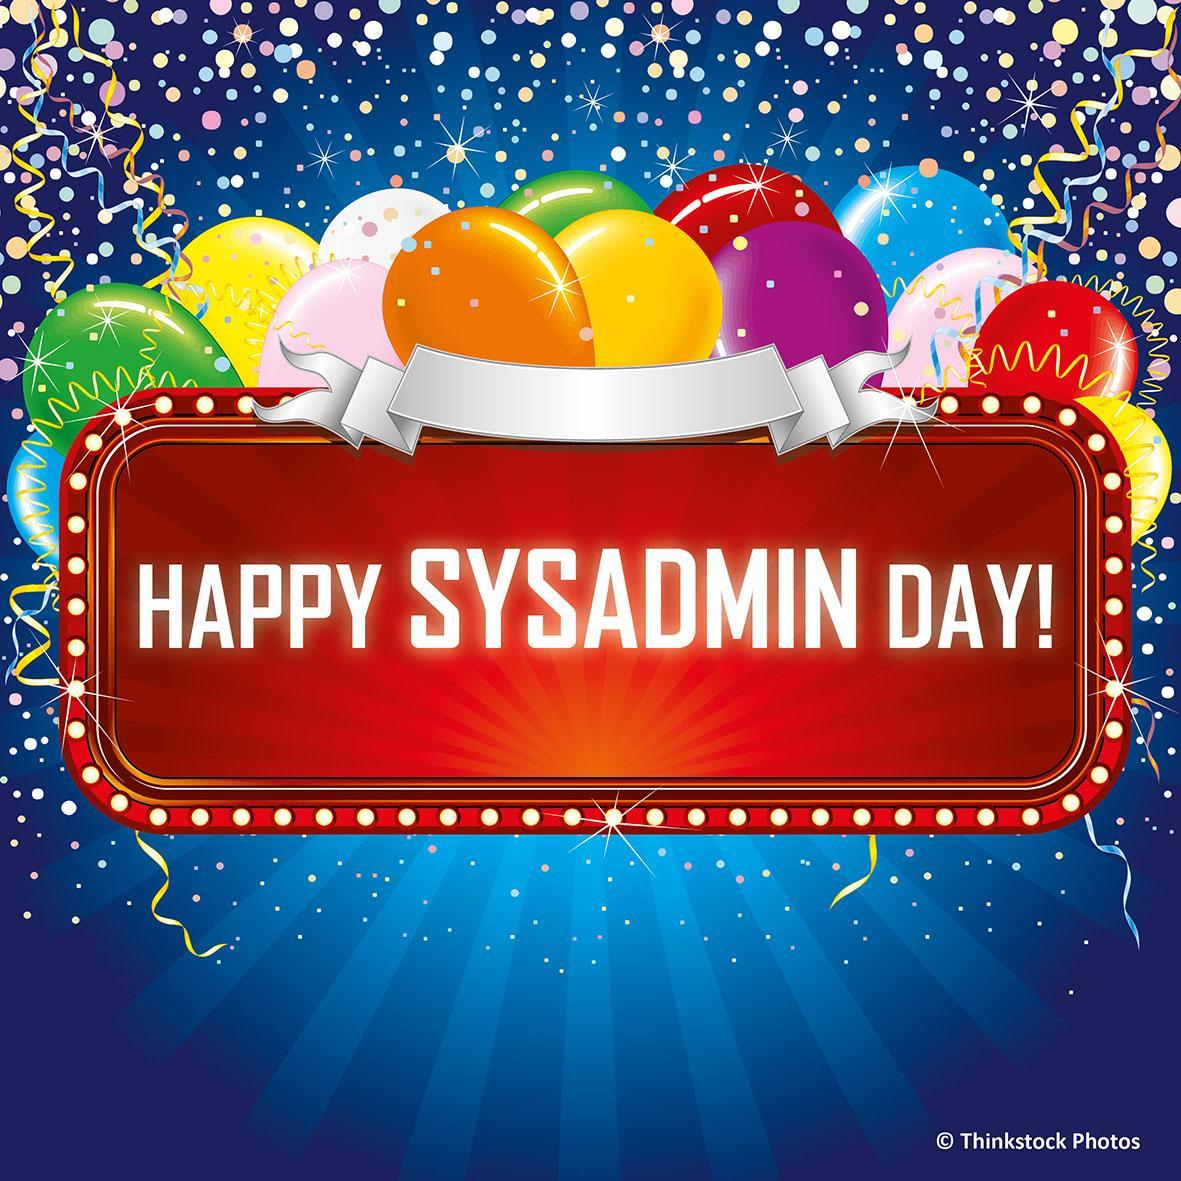 Happy SysAdminDay